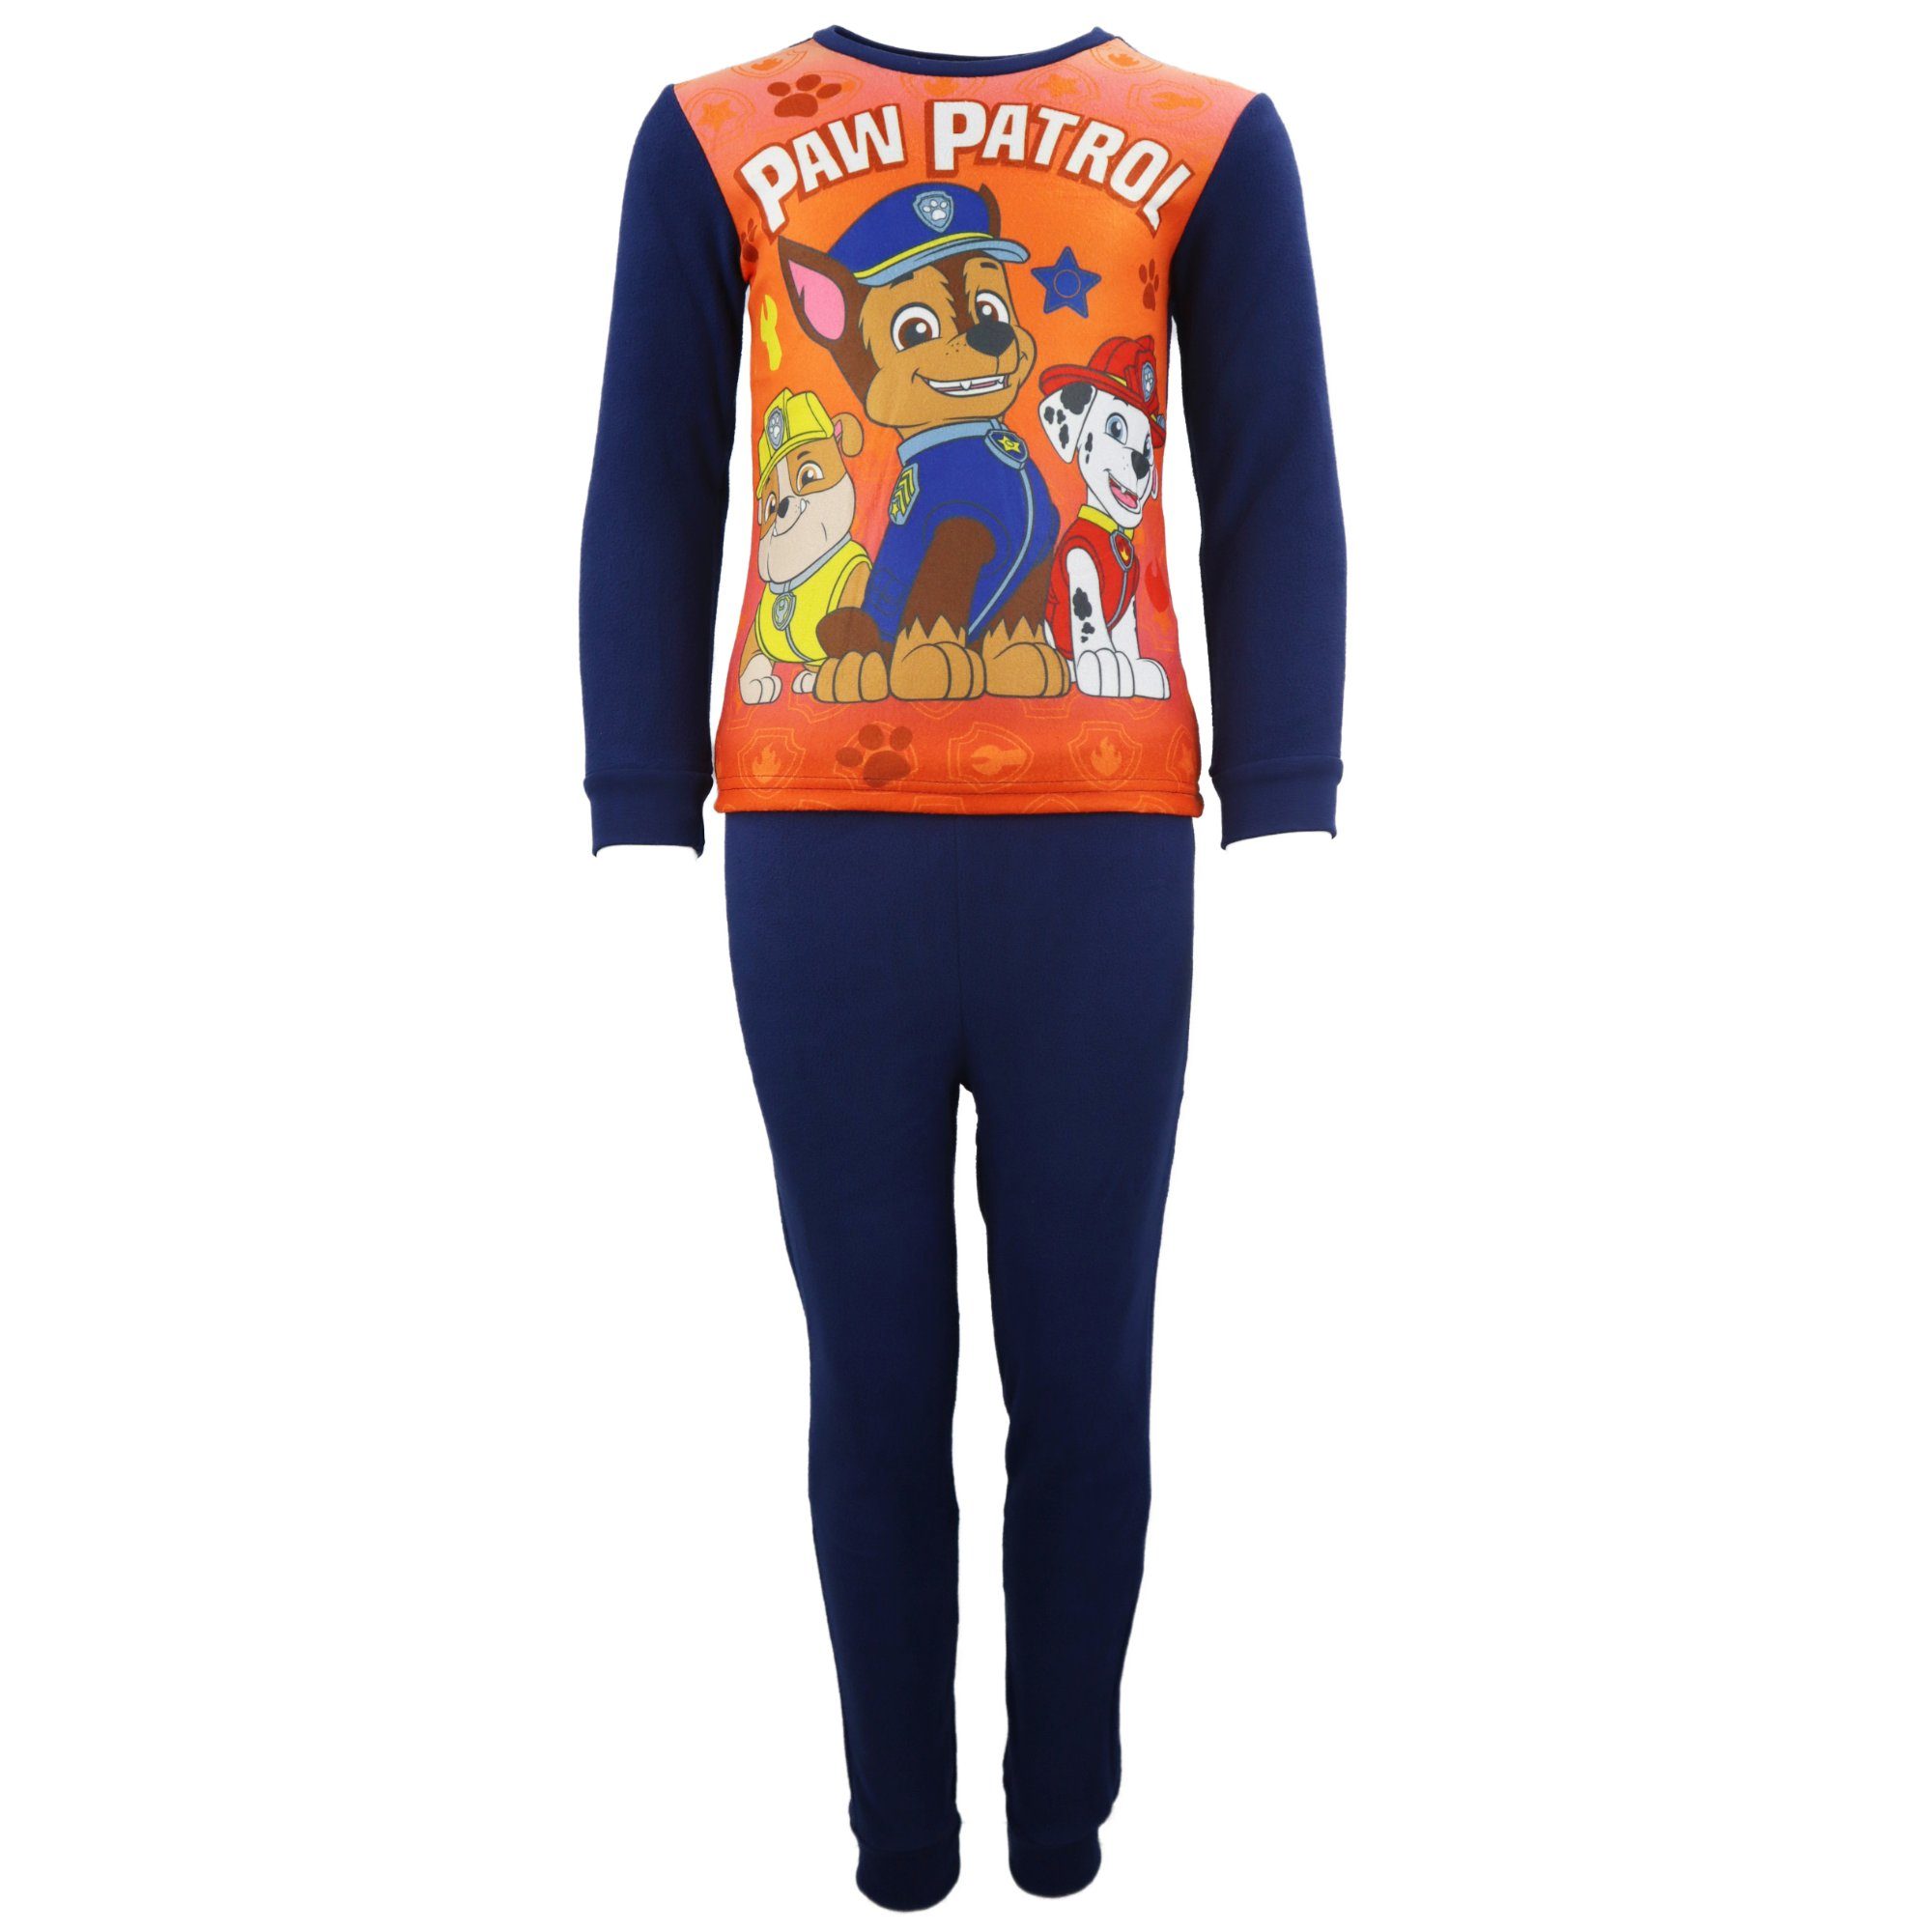 92 Patrol PAW Pyjama Kinder bis Paw 128 PATROL Schlafanzug Jungen Fleece Polar Blau Gr.